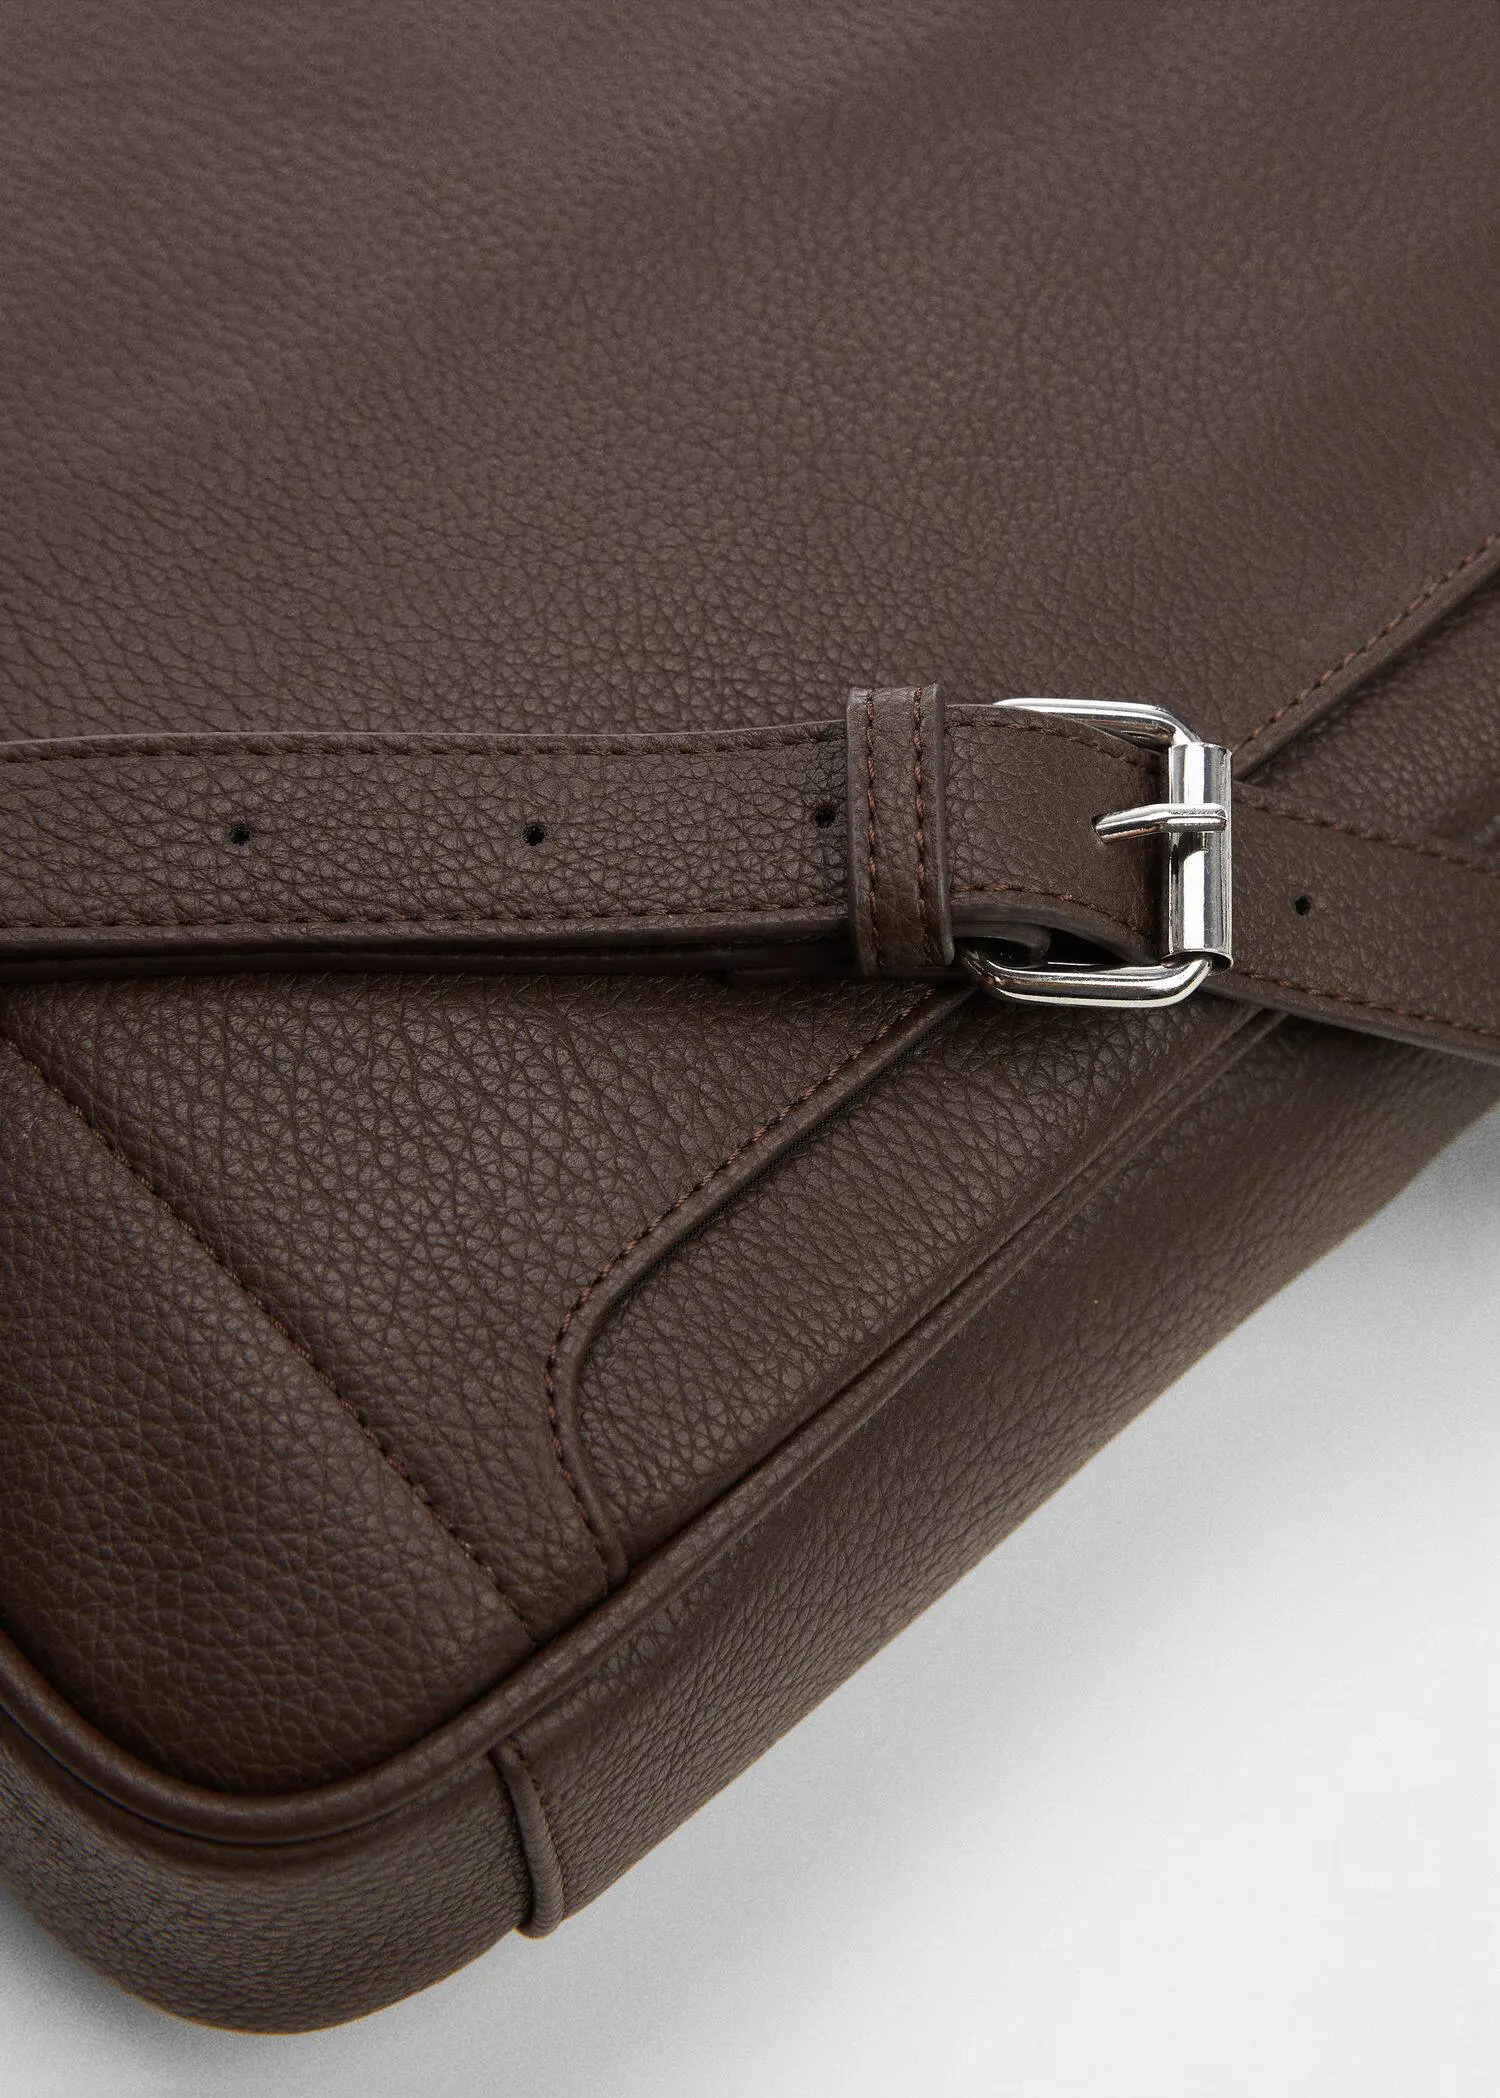 Mango Leather-effect briefcase. 2